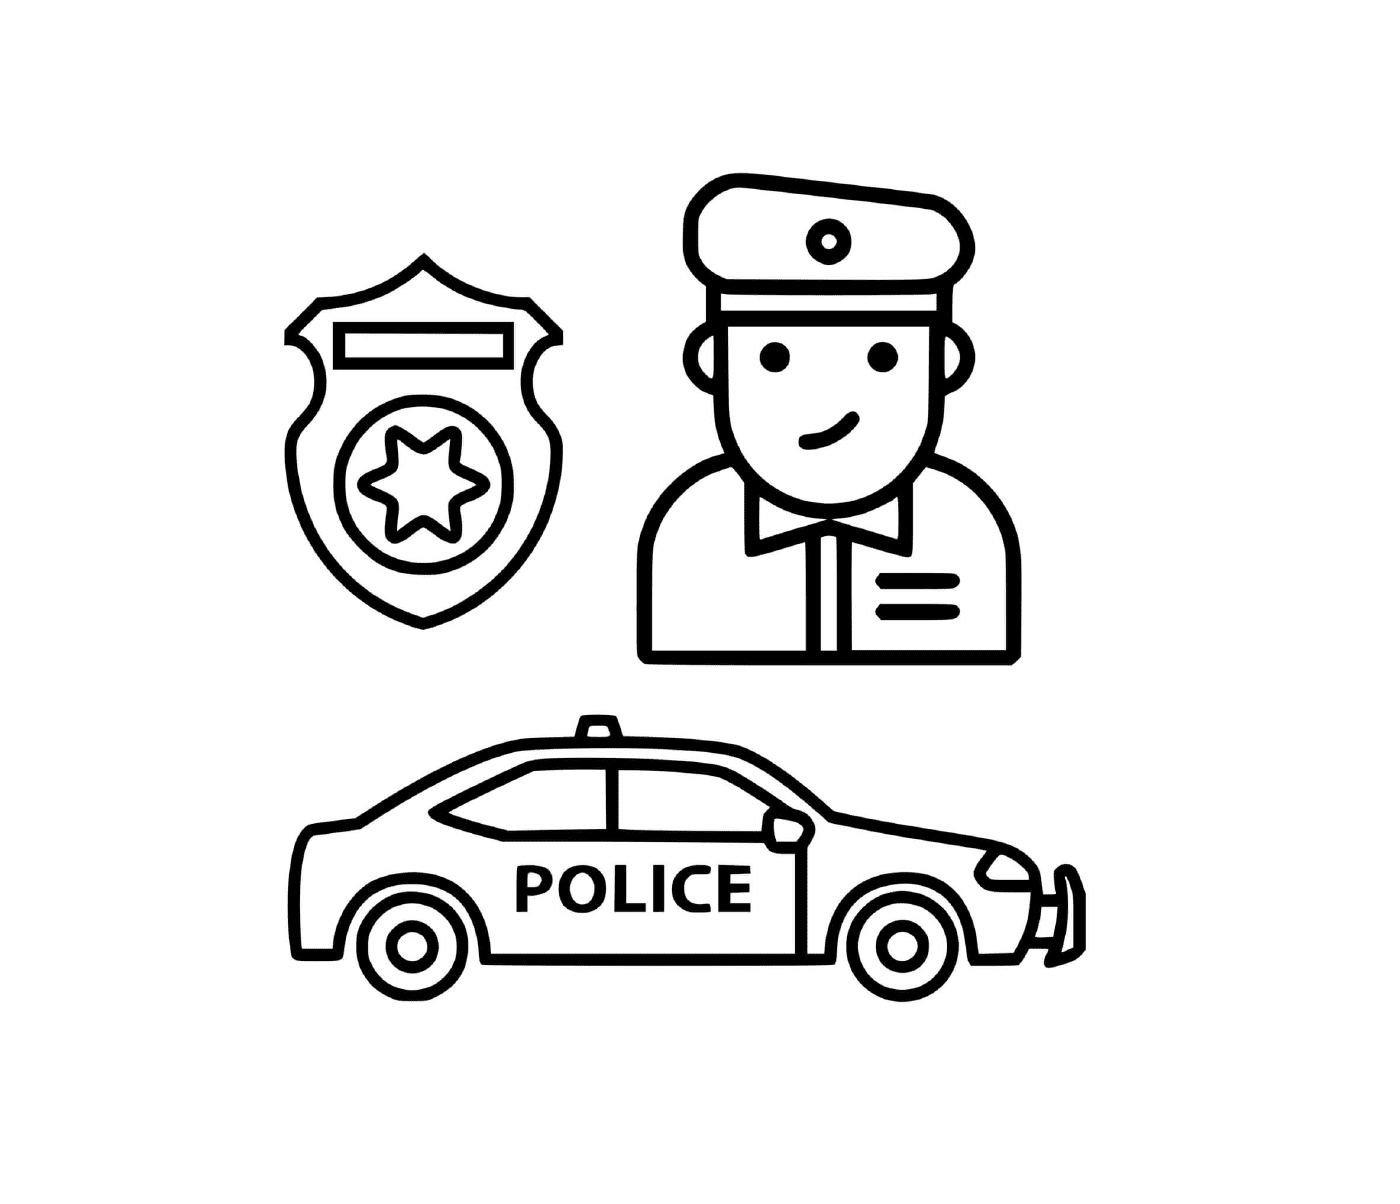   Policier, voiture, badge distinctif 